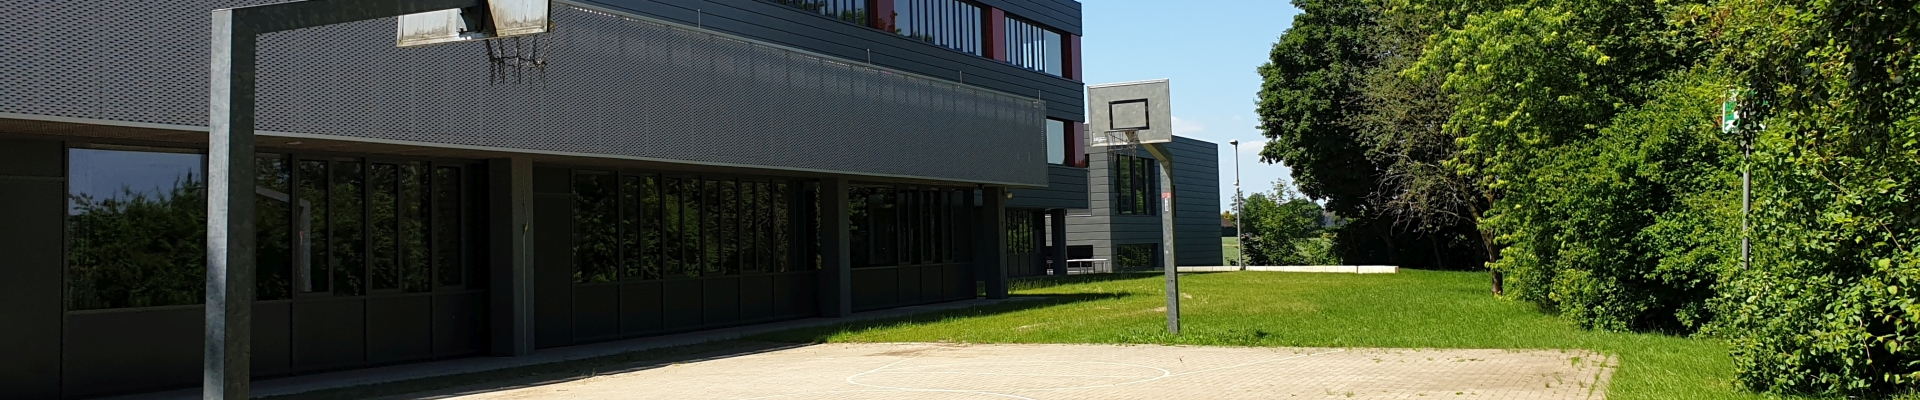 Felix-Fechenbach-Gesamtschule Leopoldshöhe